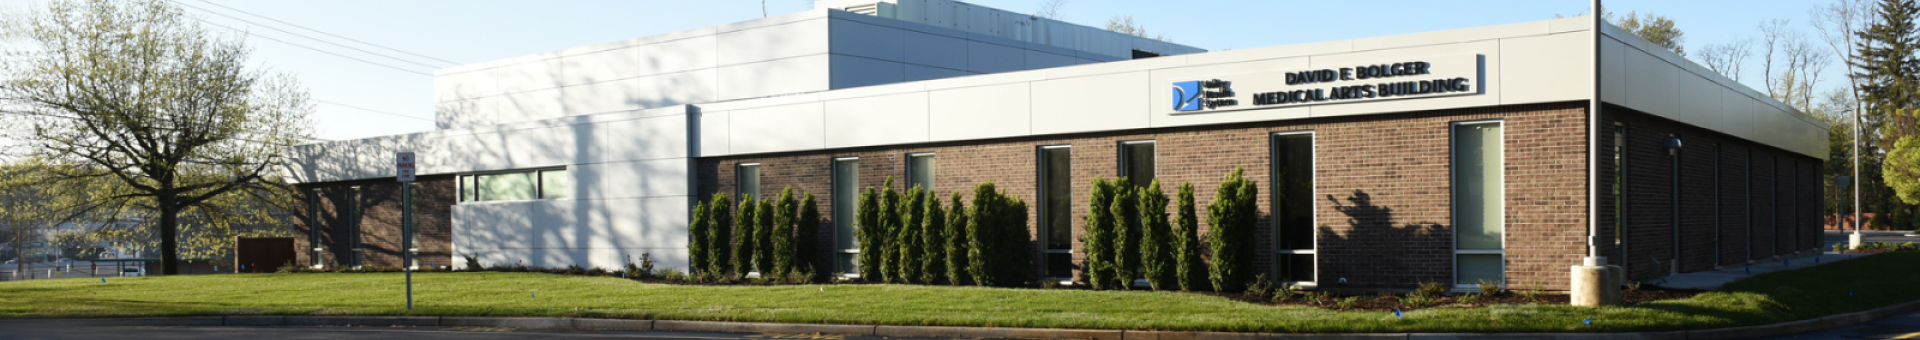 The Bolger Medical Arts Building, home of VMG - Electrophysiology, Paramus